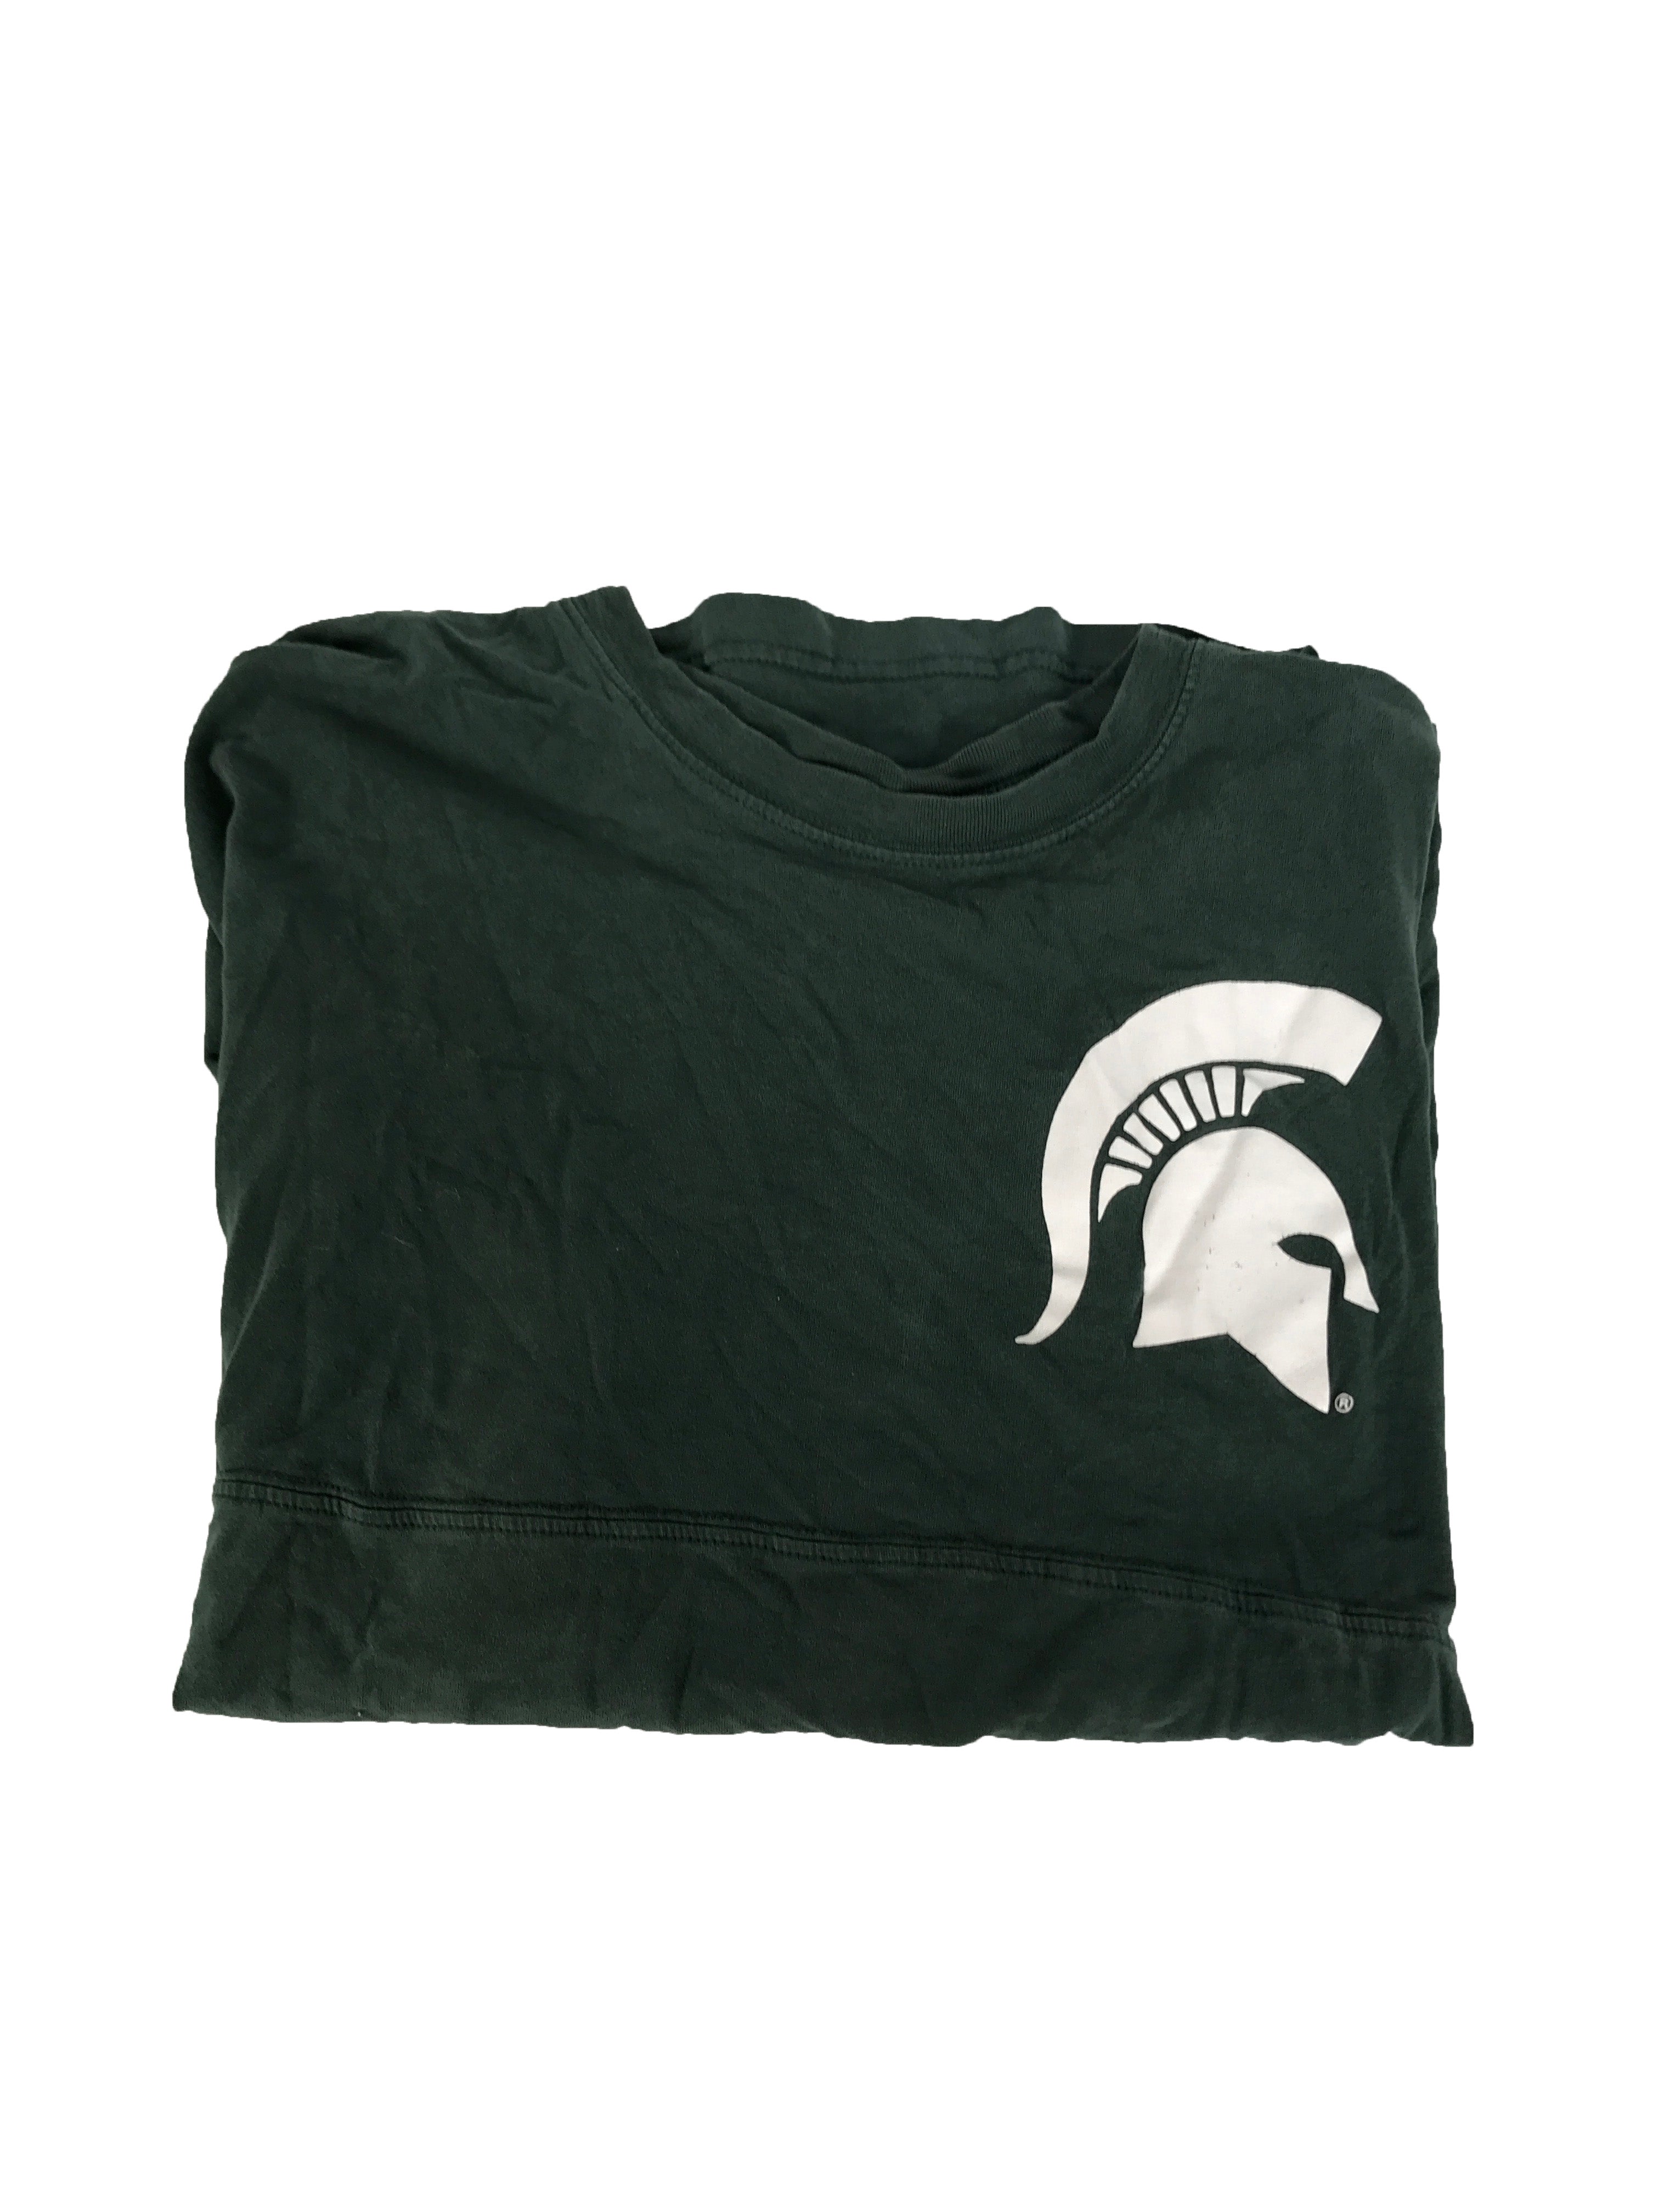 Michigan State Green T-Shirt Kid's Size S